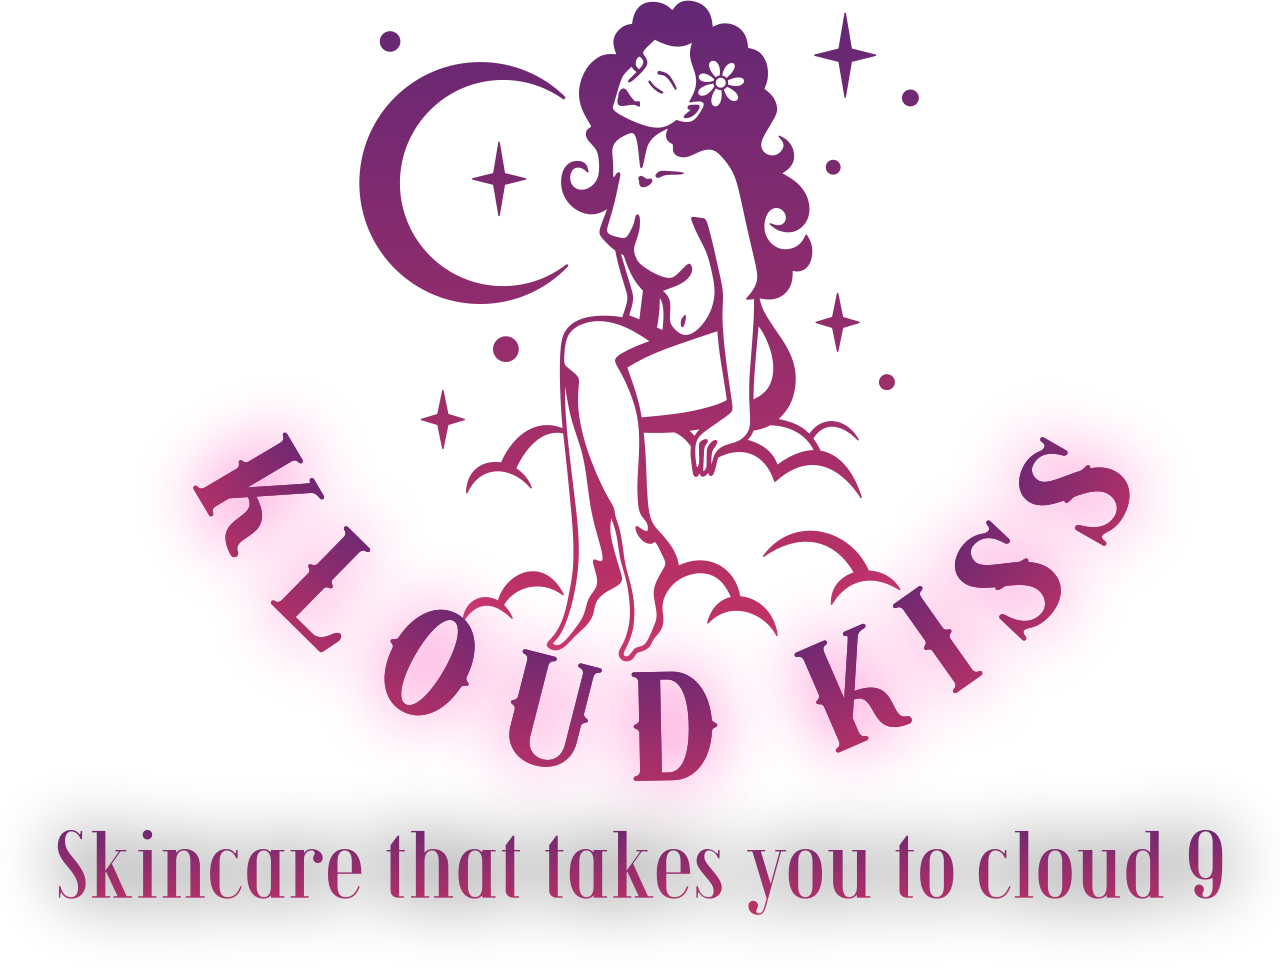 KLOUD KISS's logo